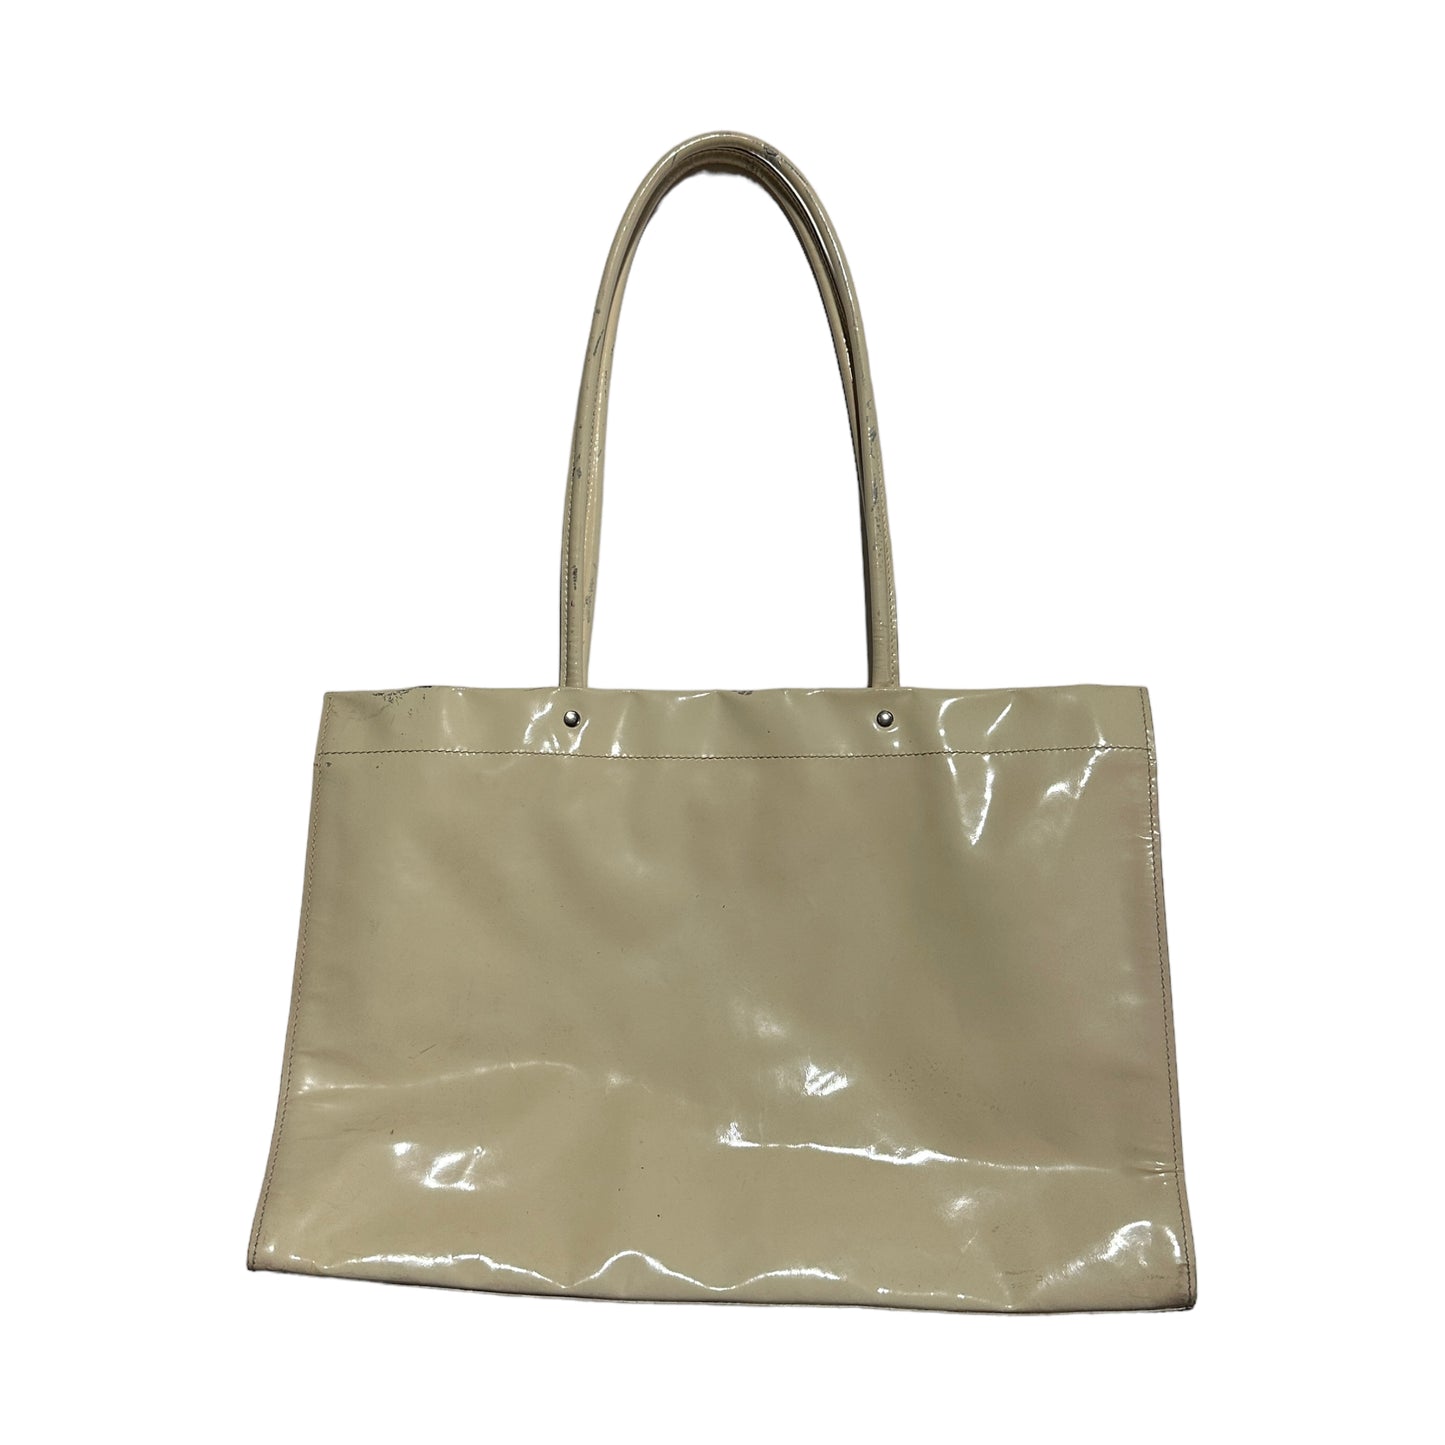 00's Miu Miu Patent Leather Bag